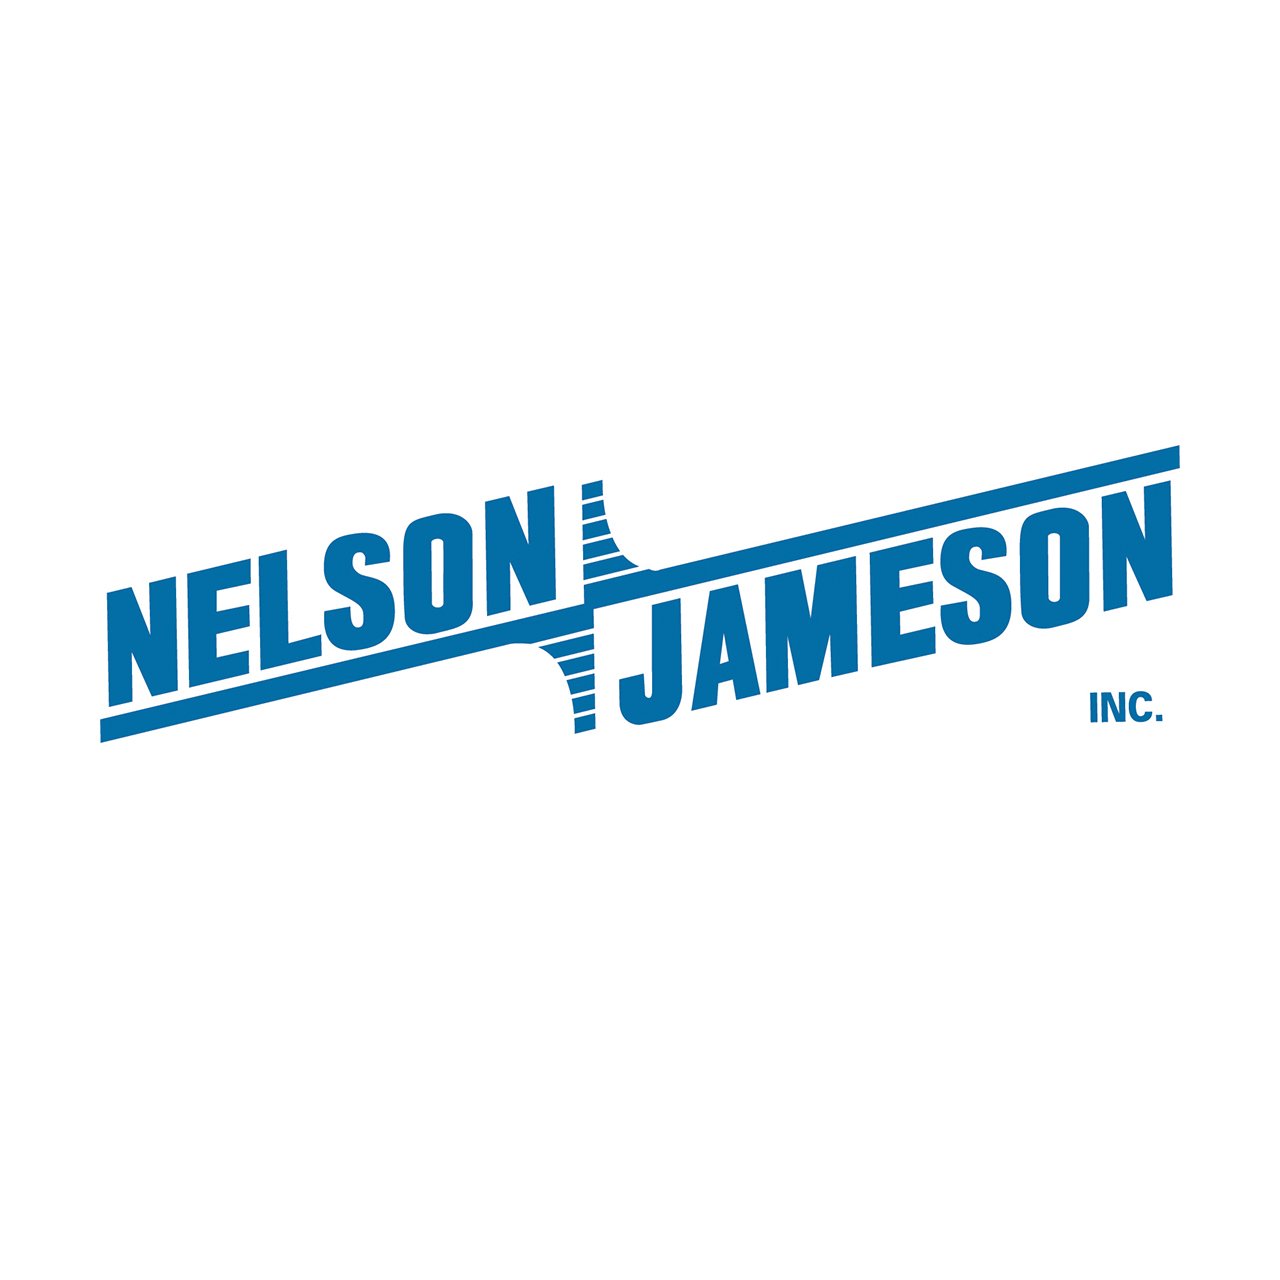 Nelson-Jameson Petri Dishes